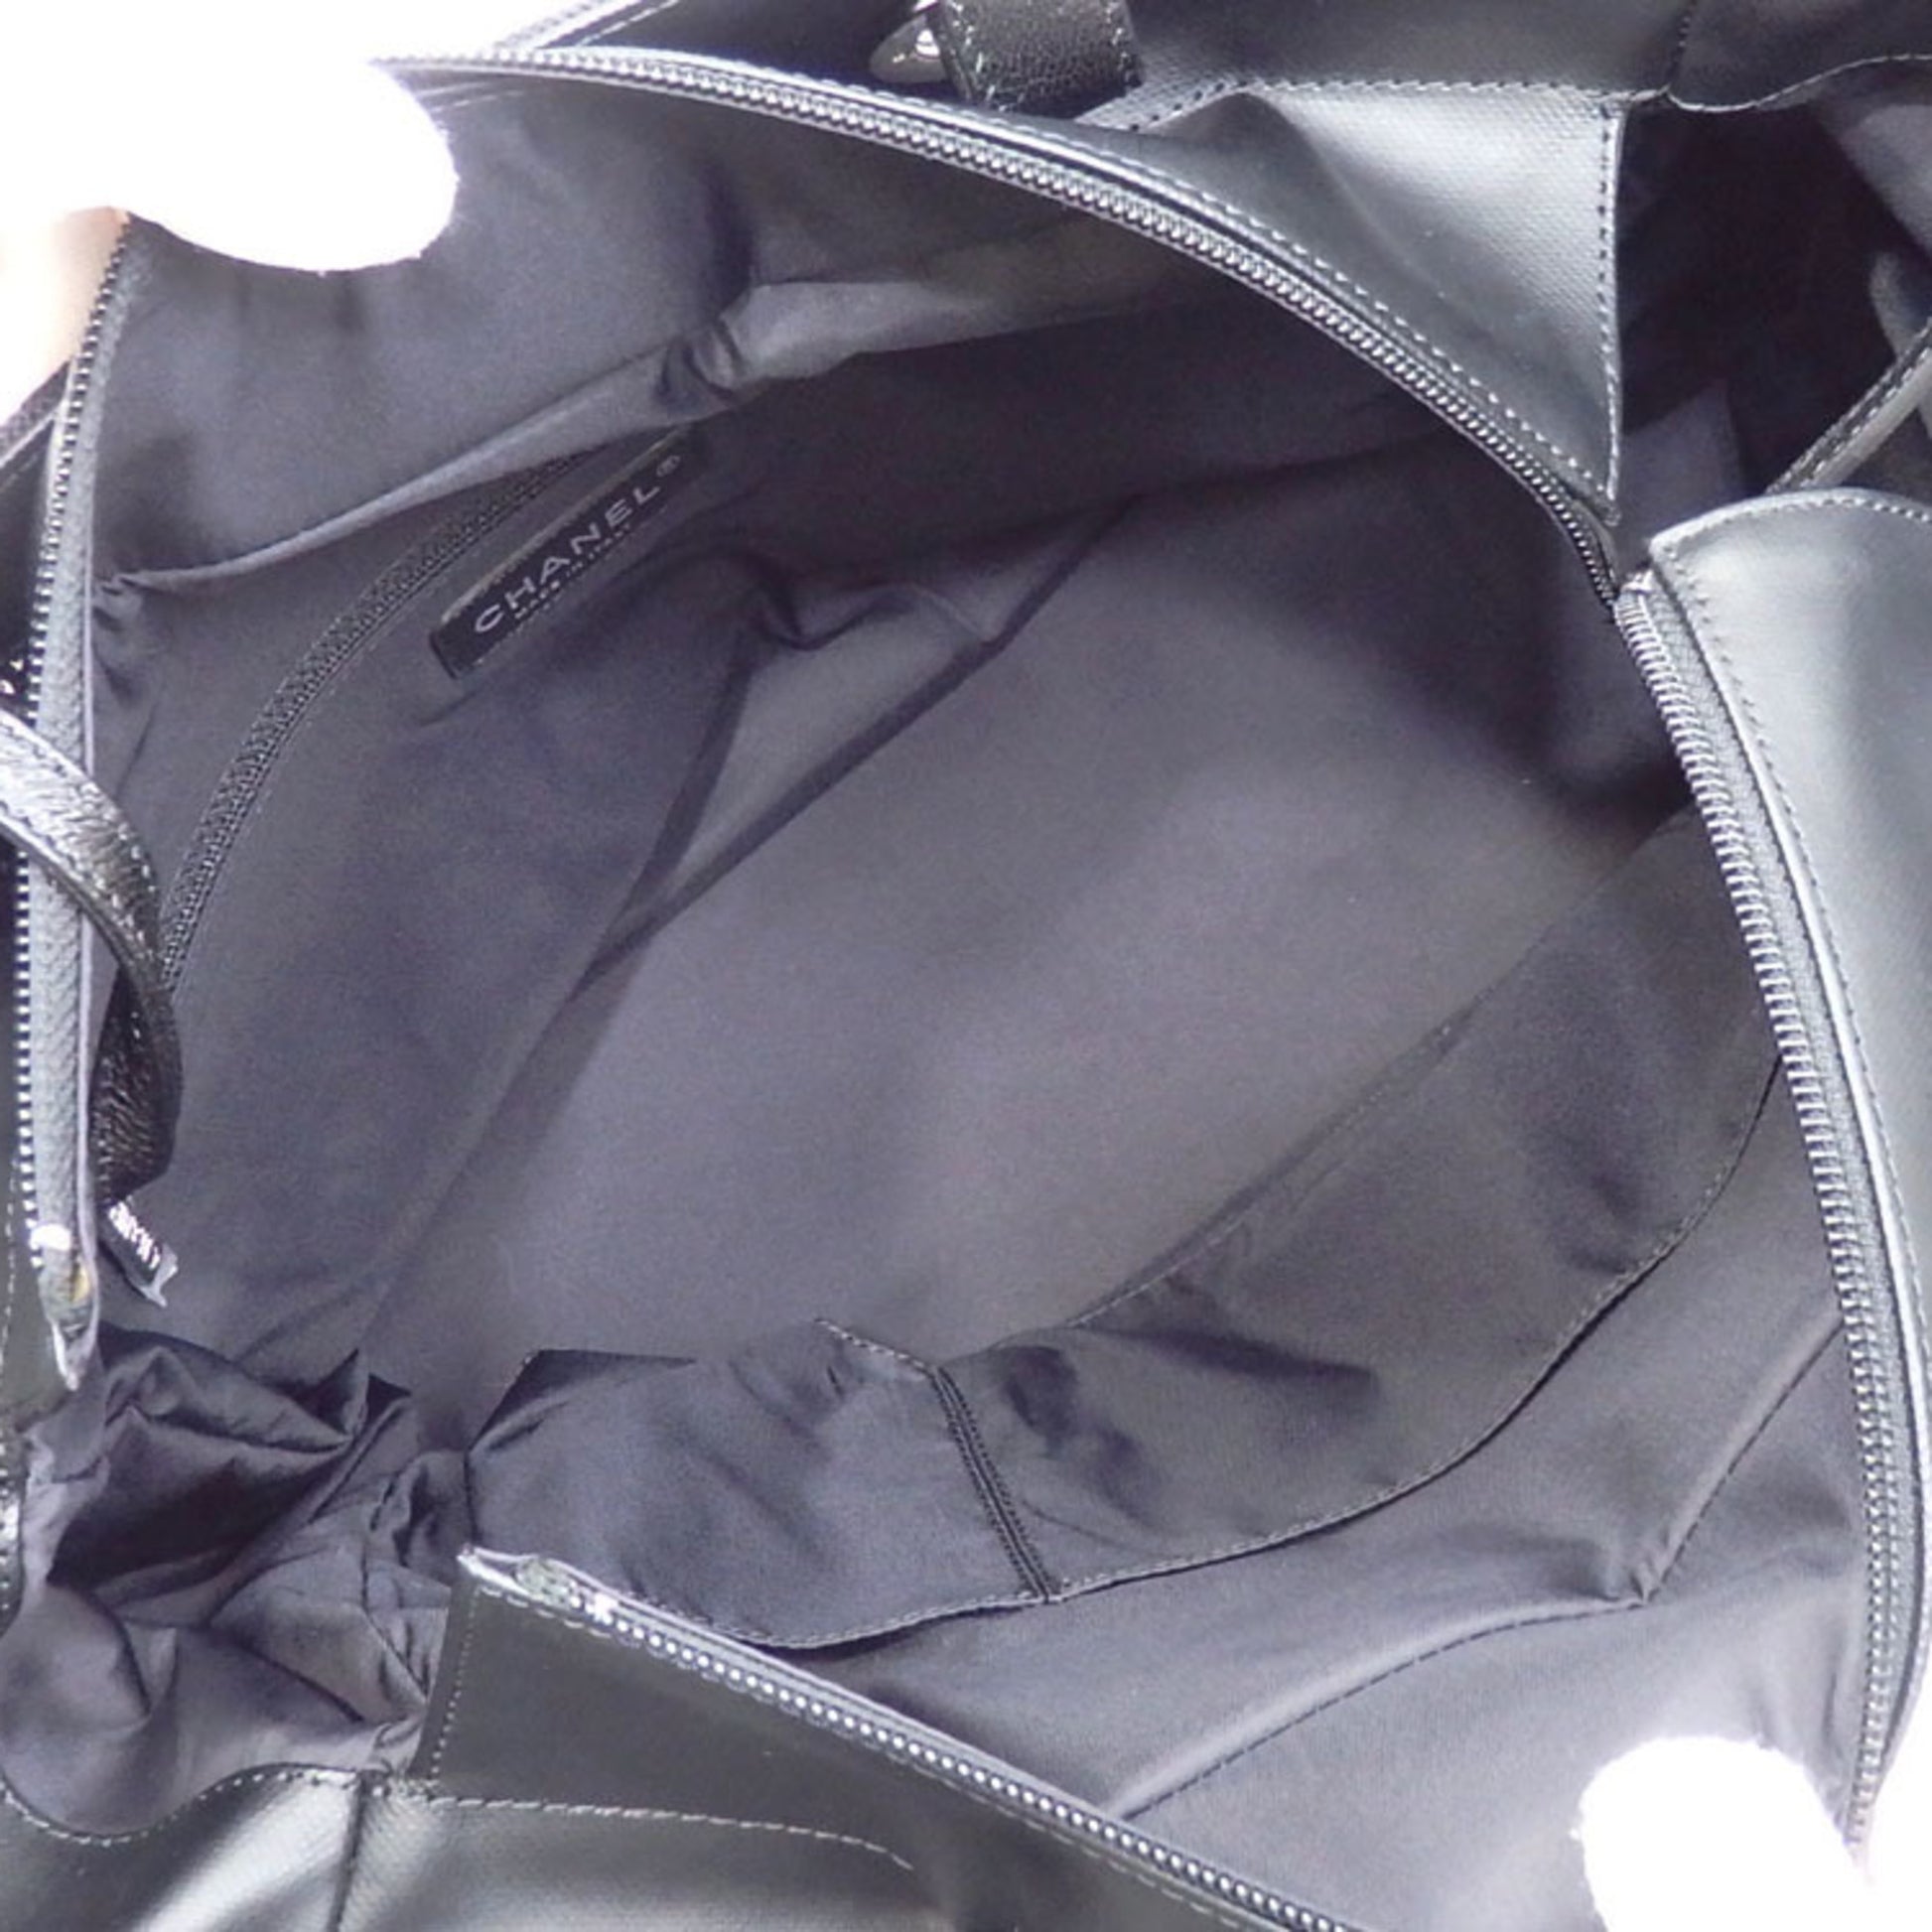 Chanel Tote Bag Paris Biarritz GM Ladies Black Coated Canvas Leather H